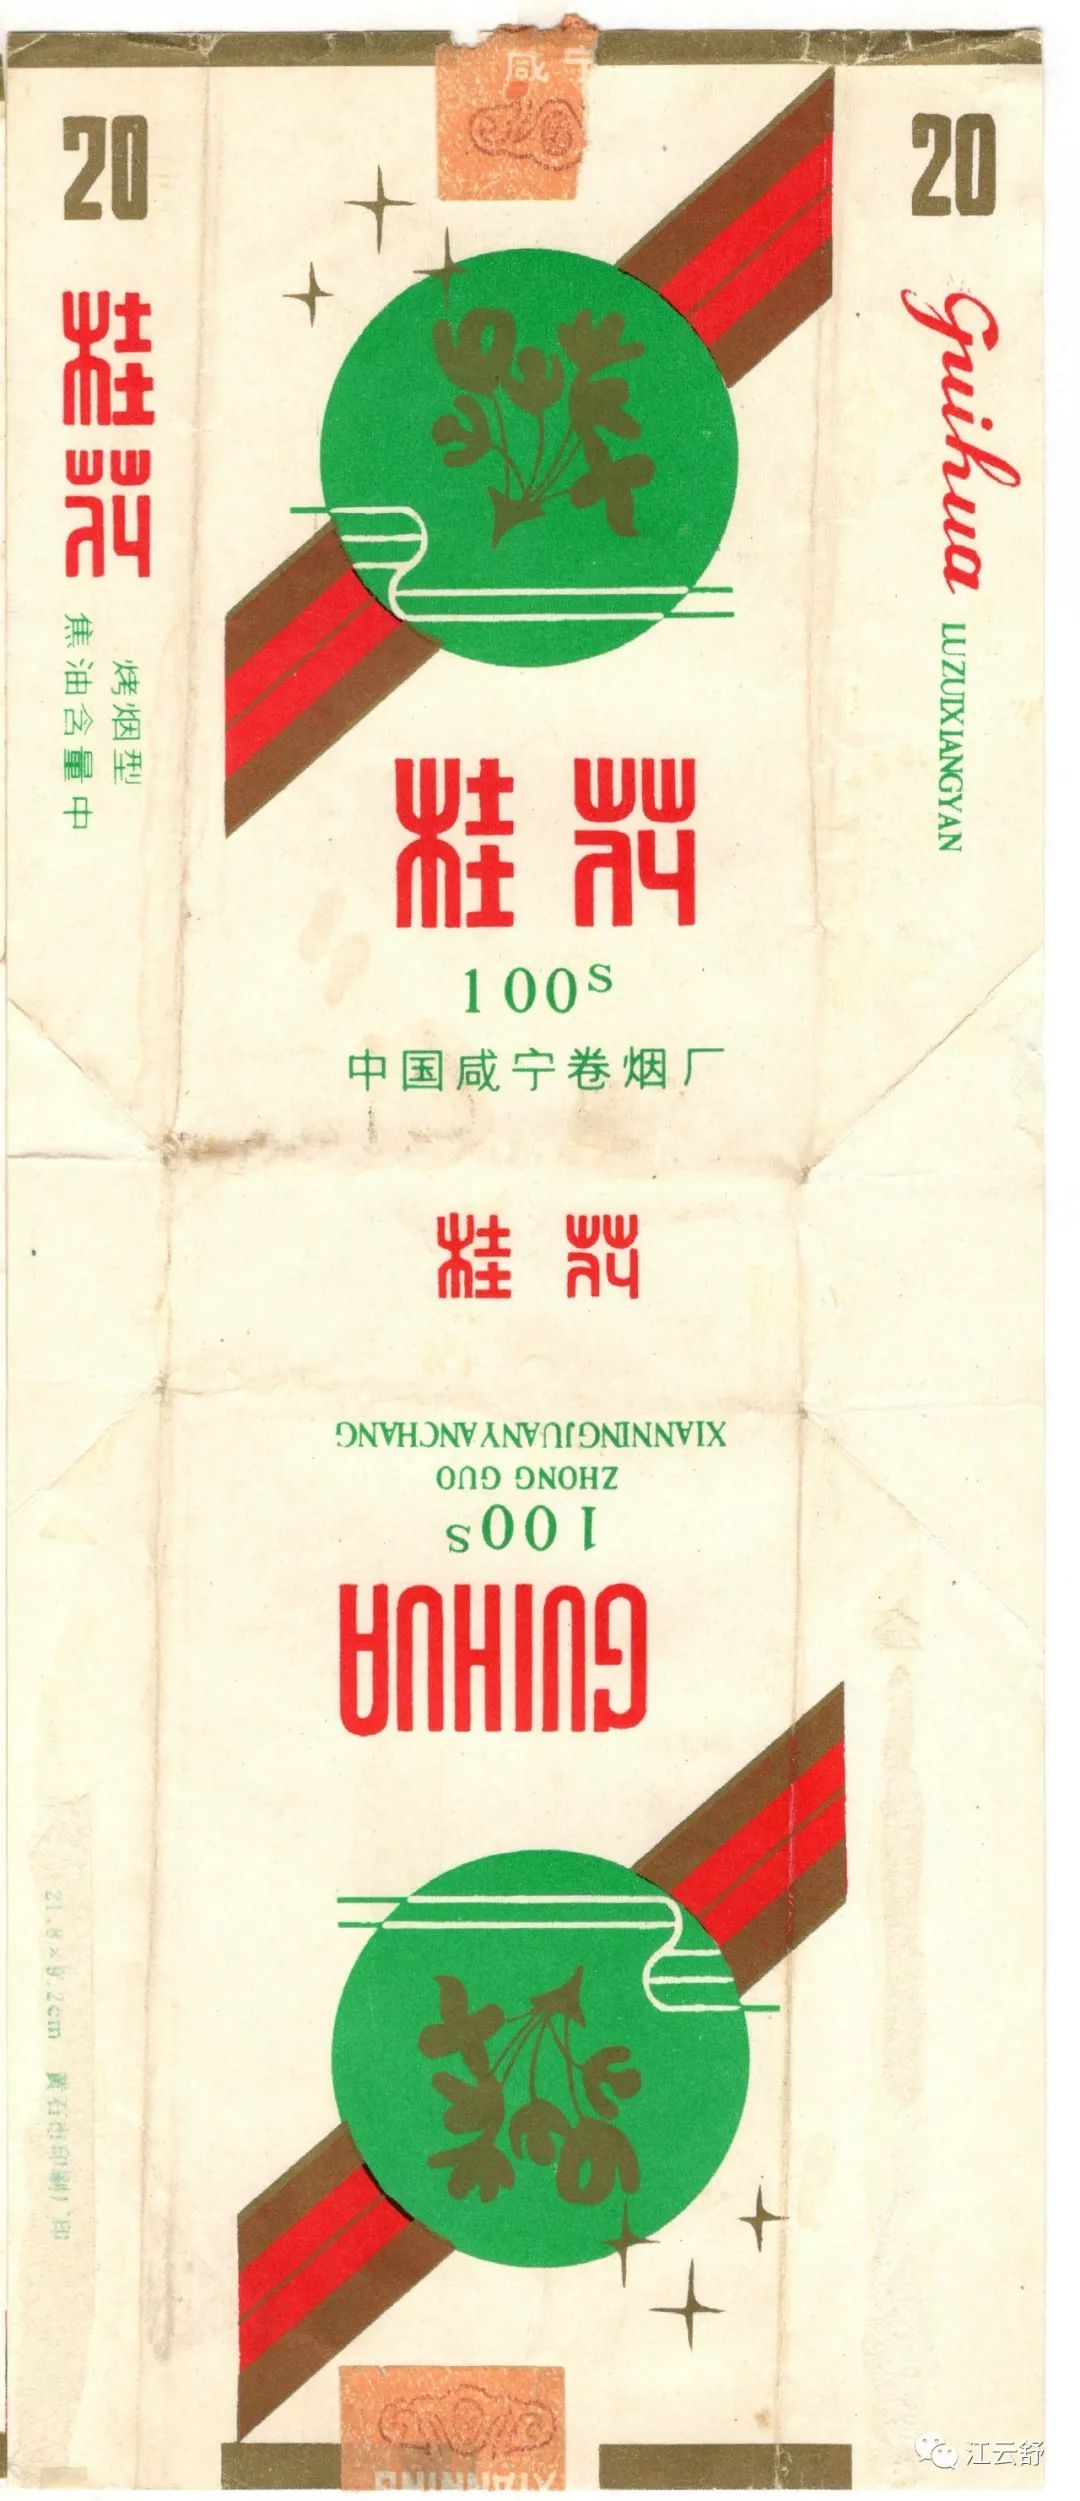 G系列烟标收集：桂花 国华 国宝 古琴